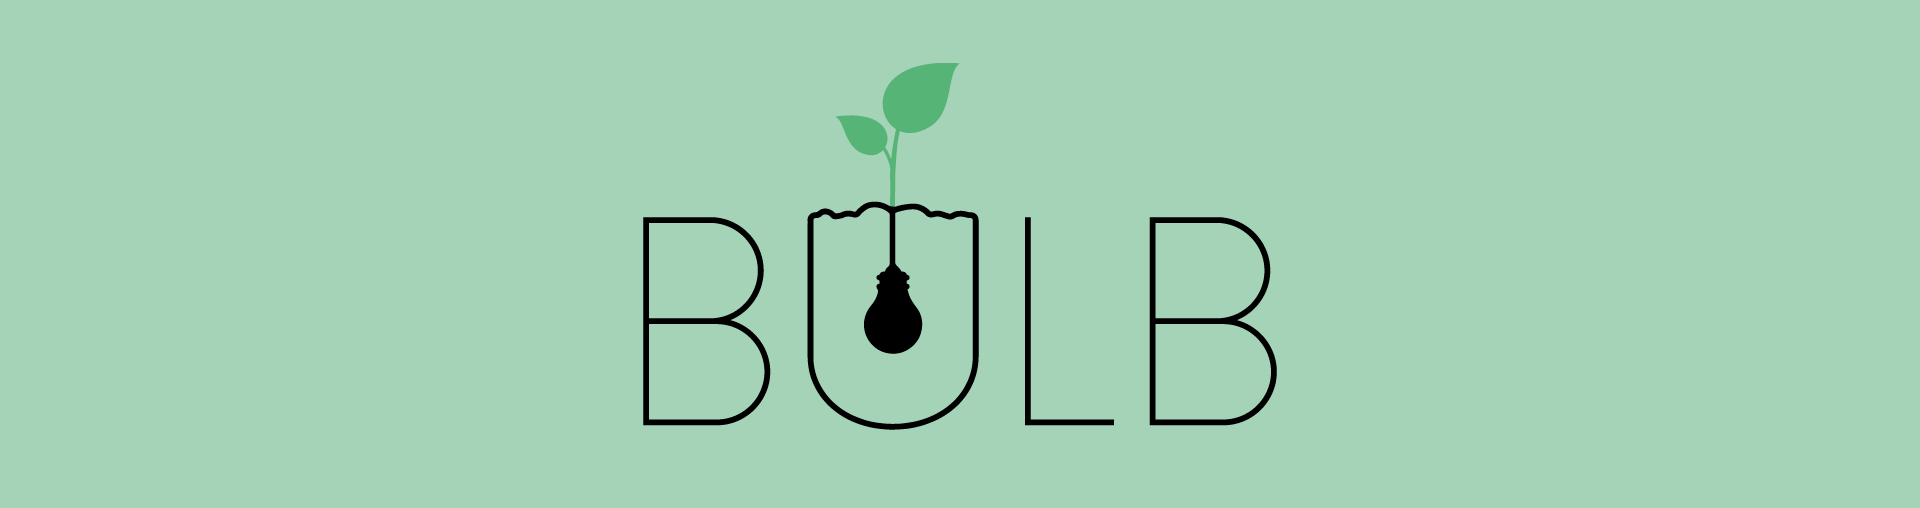 Bulb application mobile